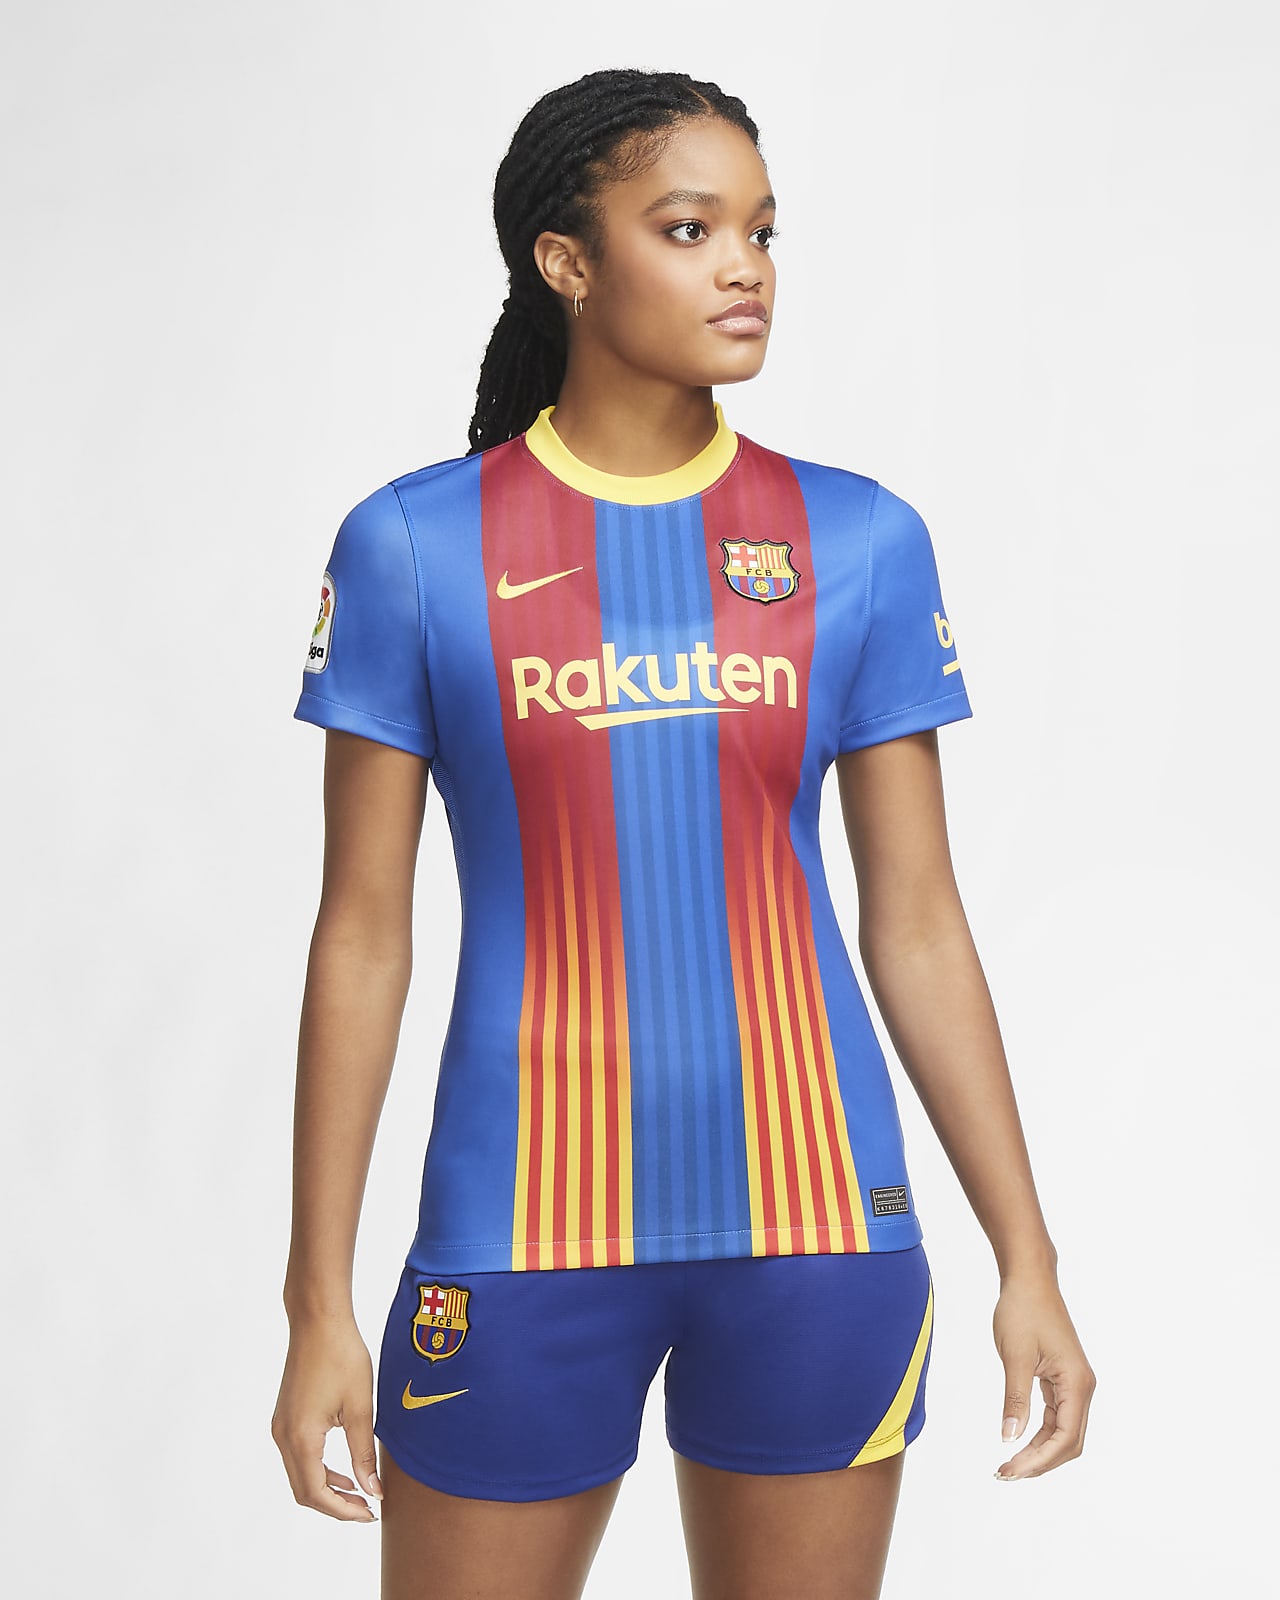 Camiseta de para mujer Stadium del FC Barcelona 2020/21. Nike.com